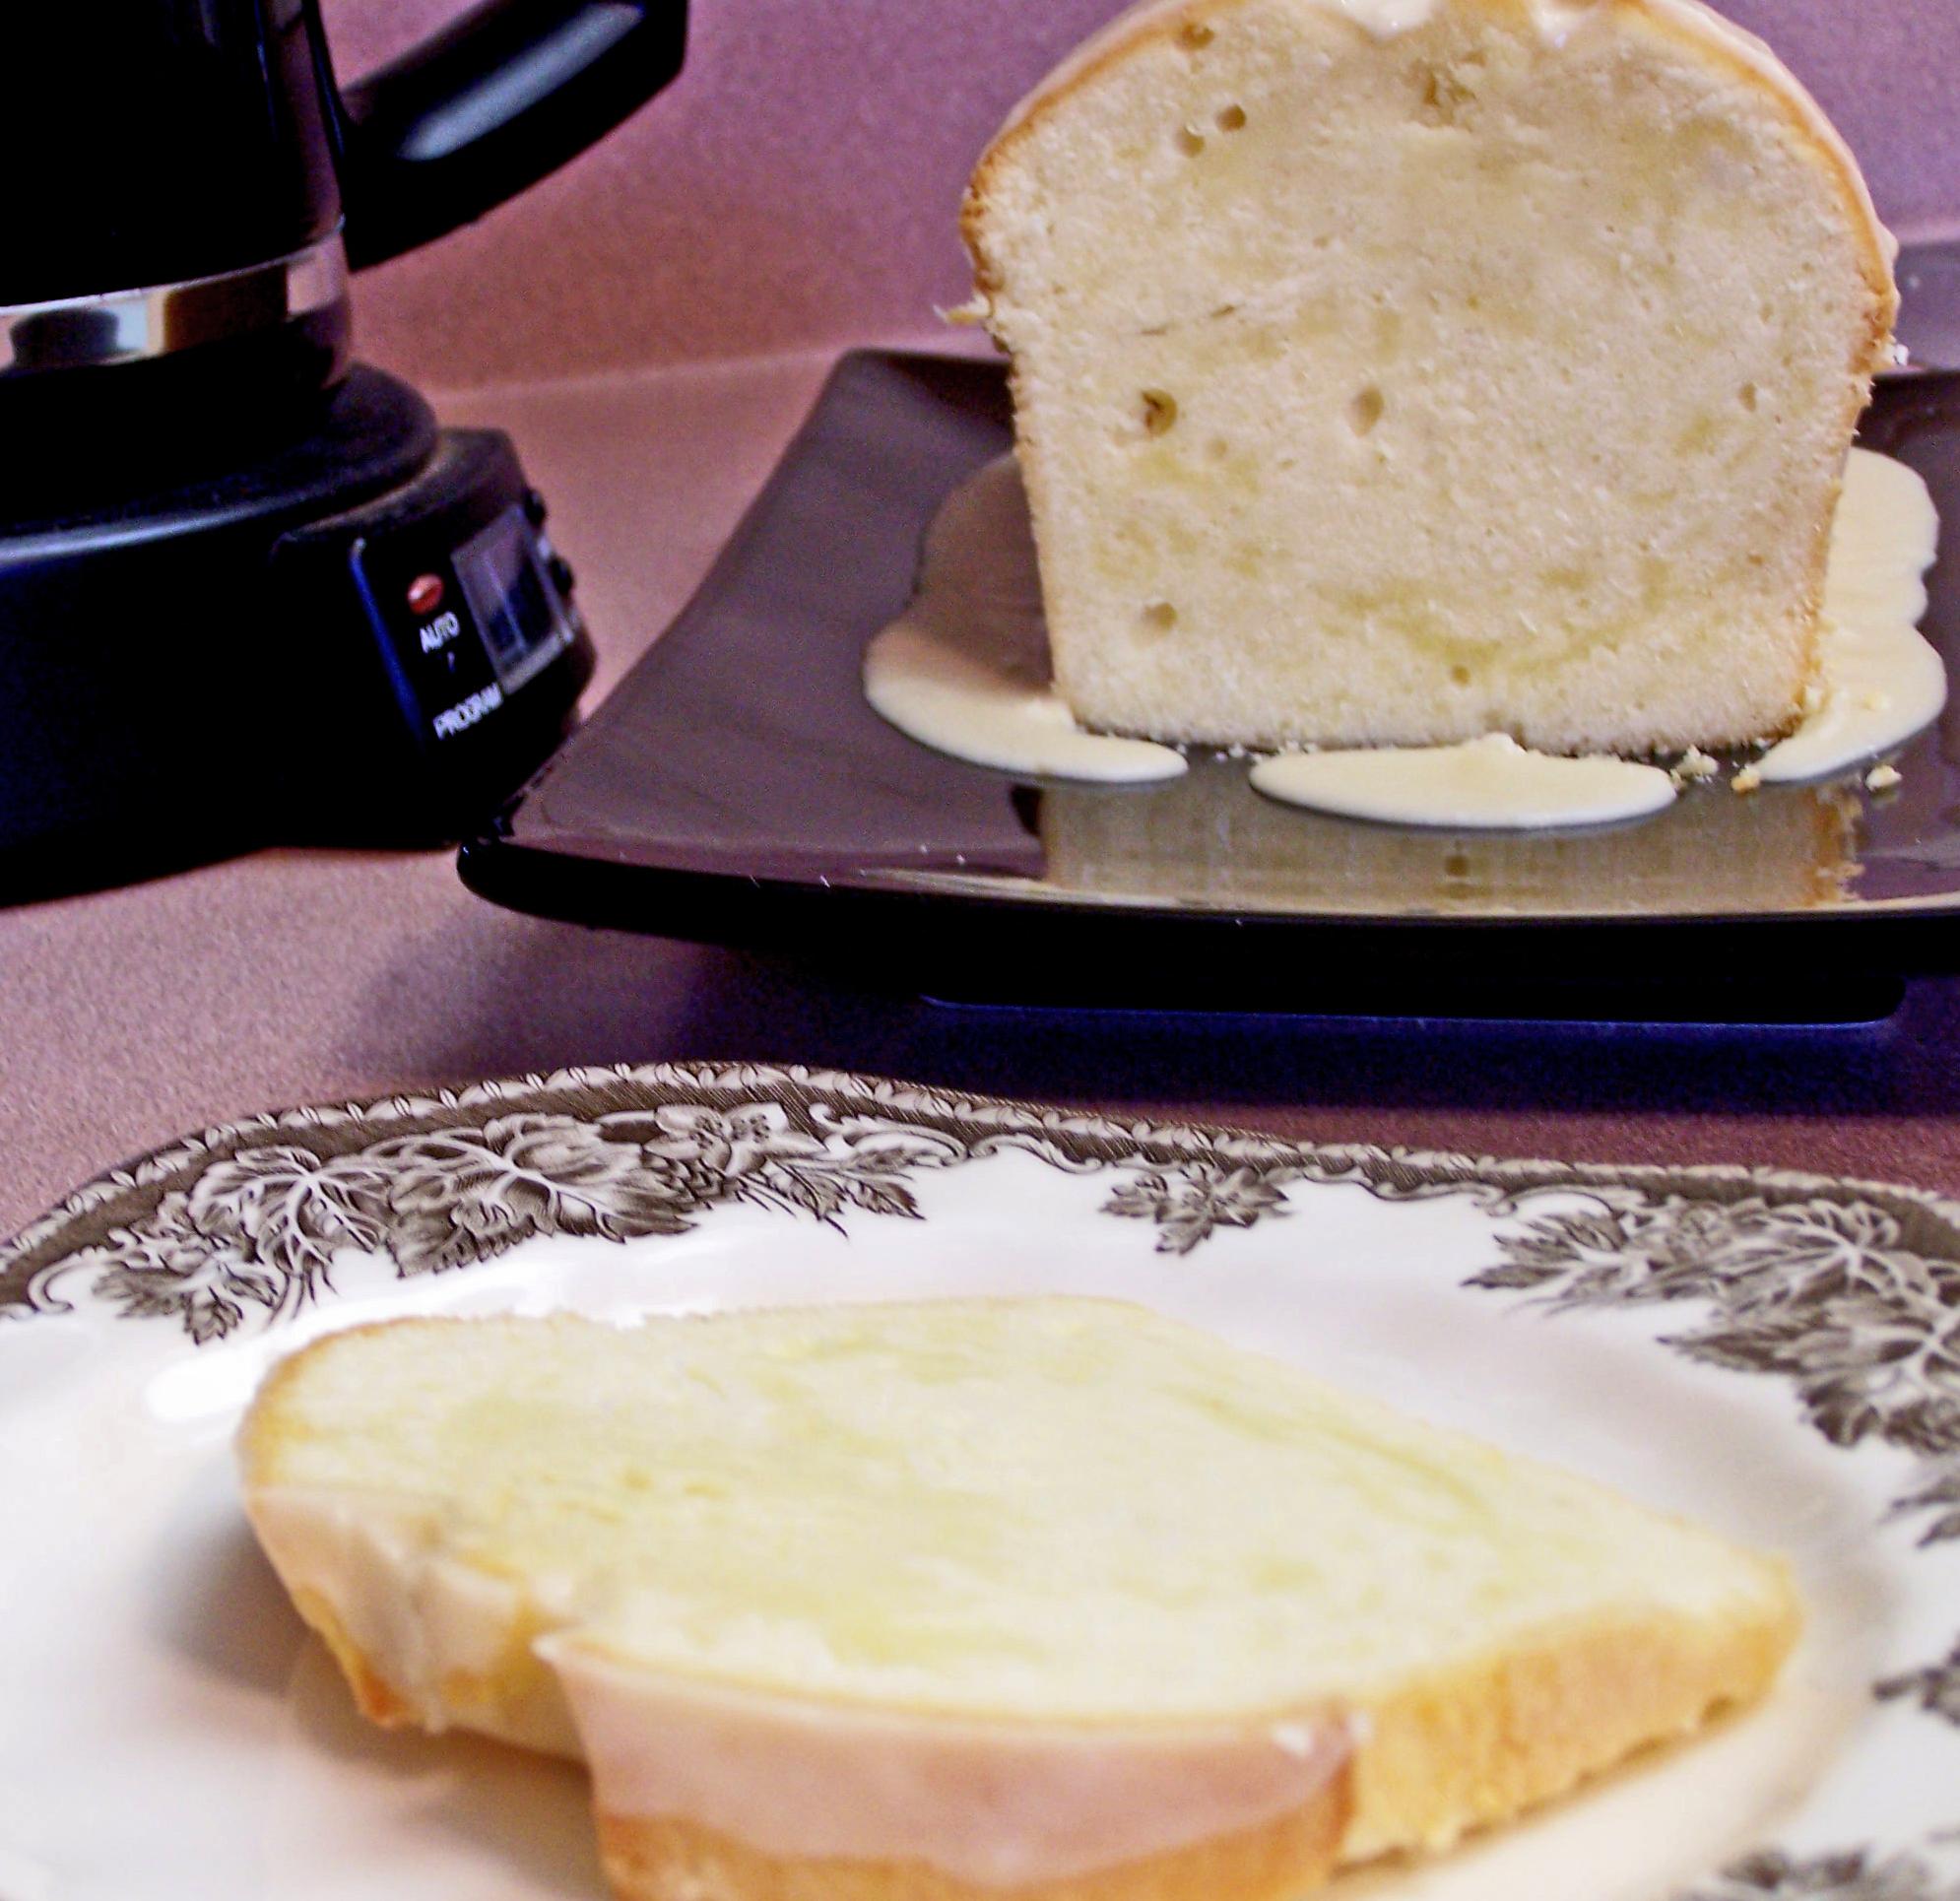 Sure! Here are 11 unique photo captions for the Glazed Almond Pound Cake recipe: